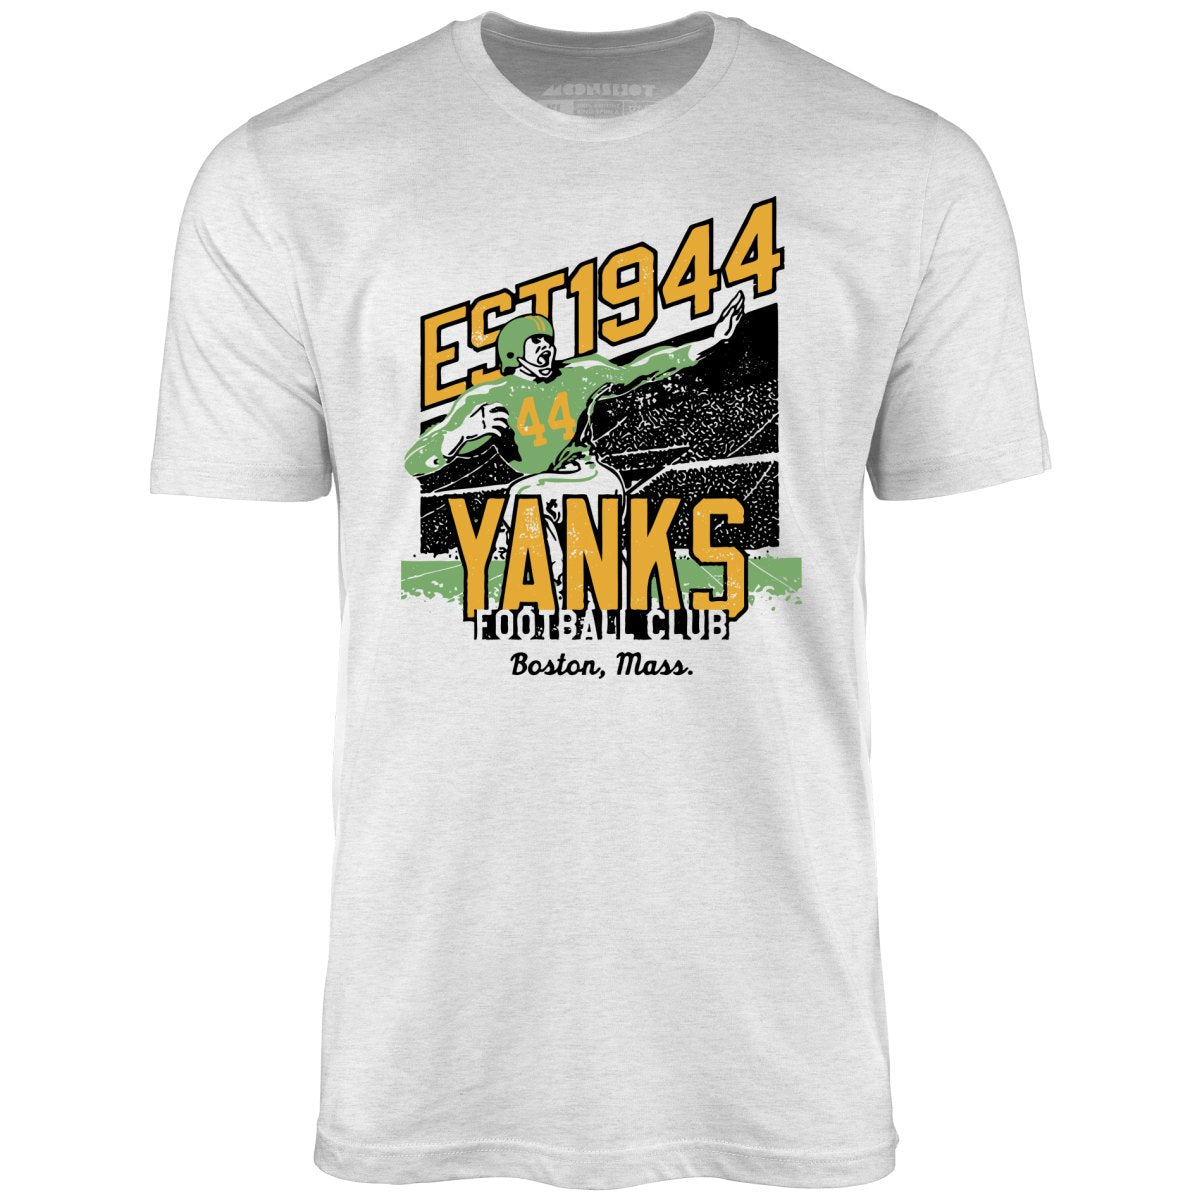 Boston Yanks - Massachusetts - Vintage Defunct Football Teams - Unisex T-Shirt